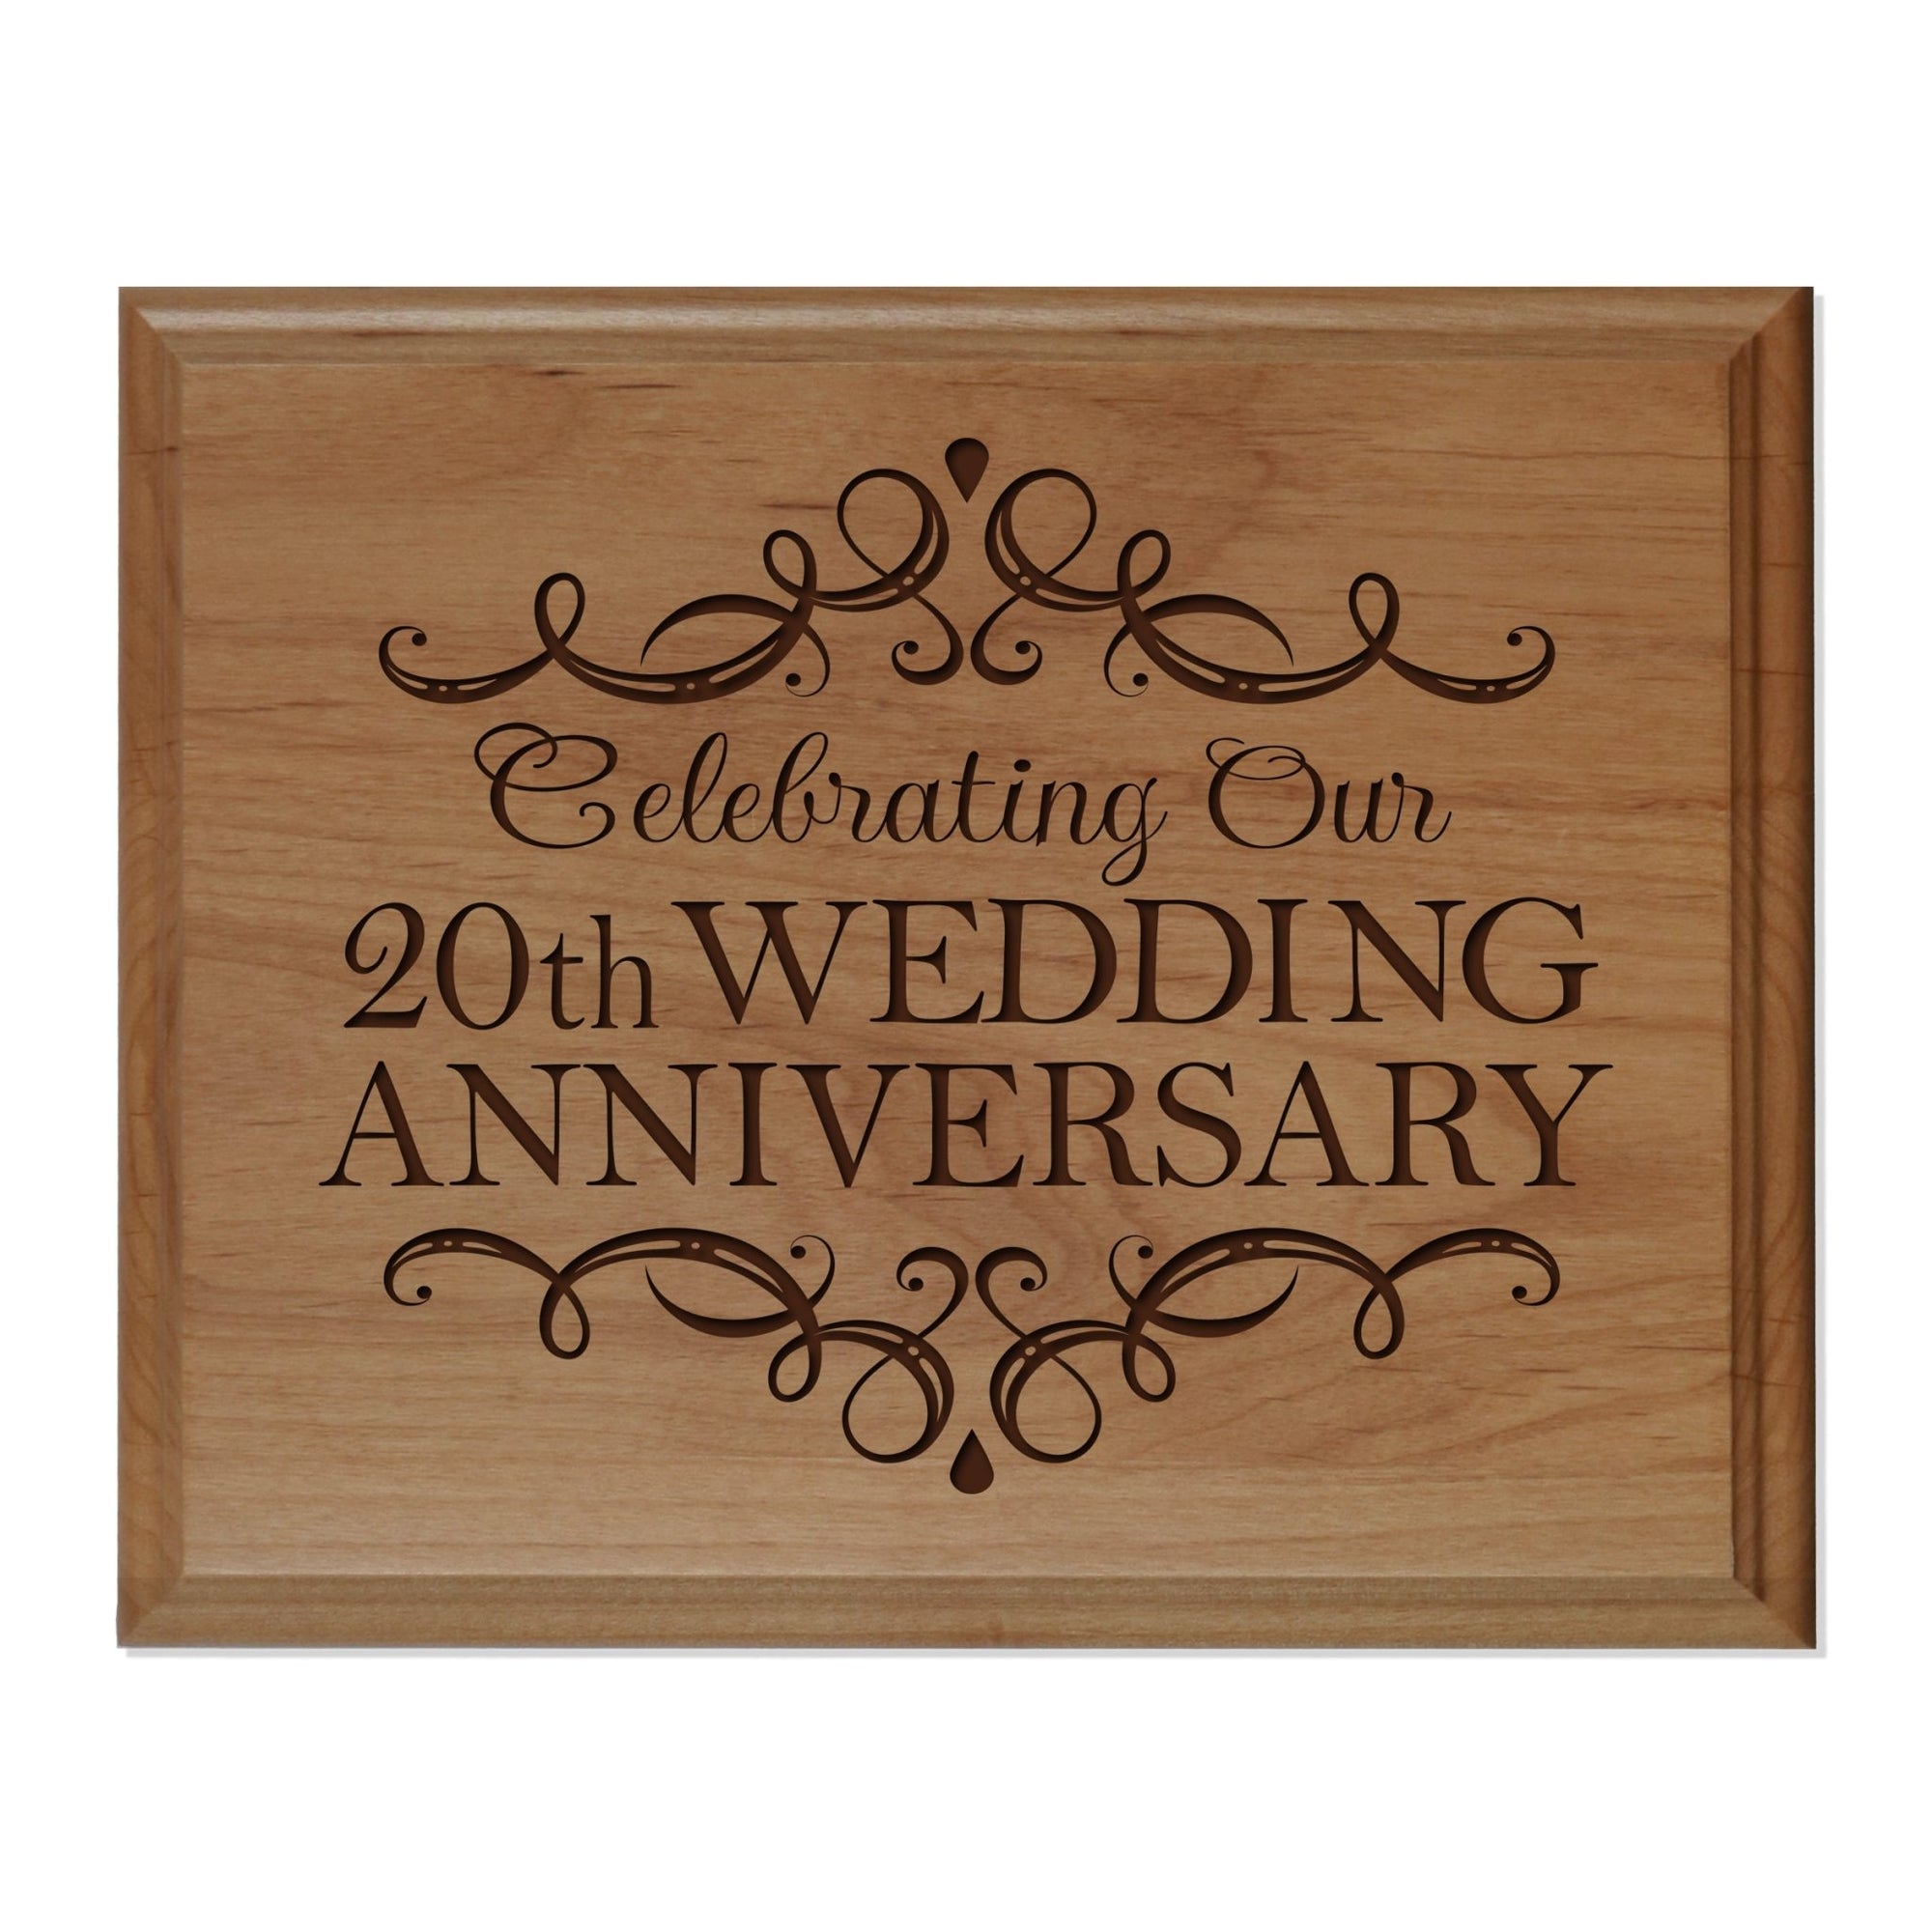 20th Wedding Anniversary Wall Plaque - Celebrating - LifeSong Milestones